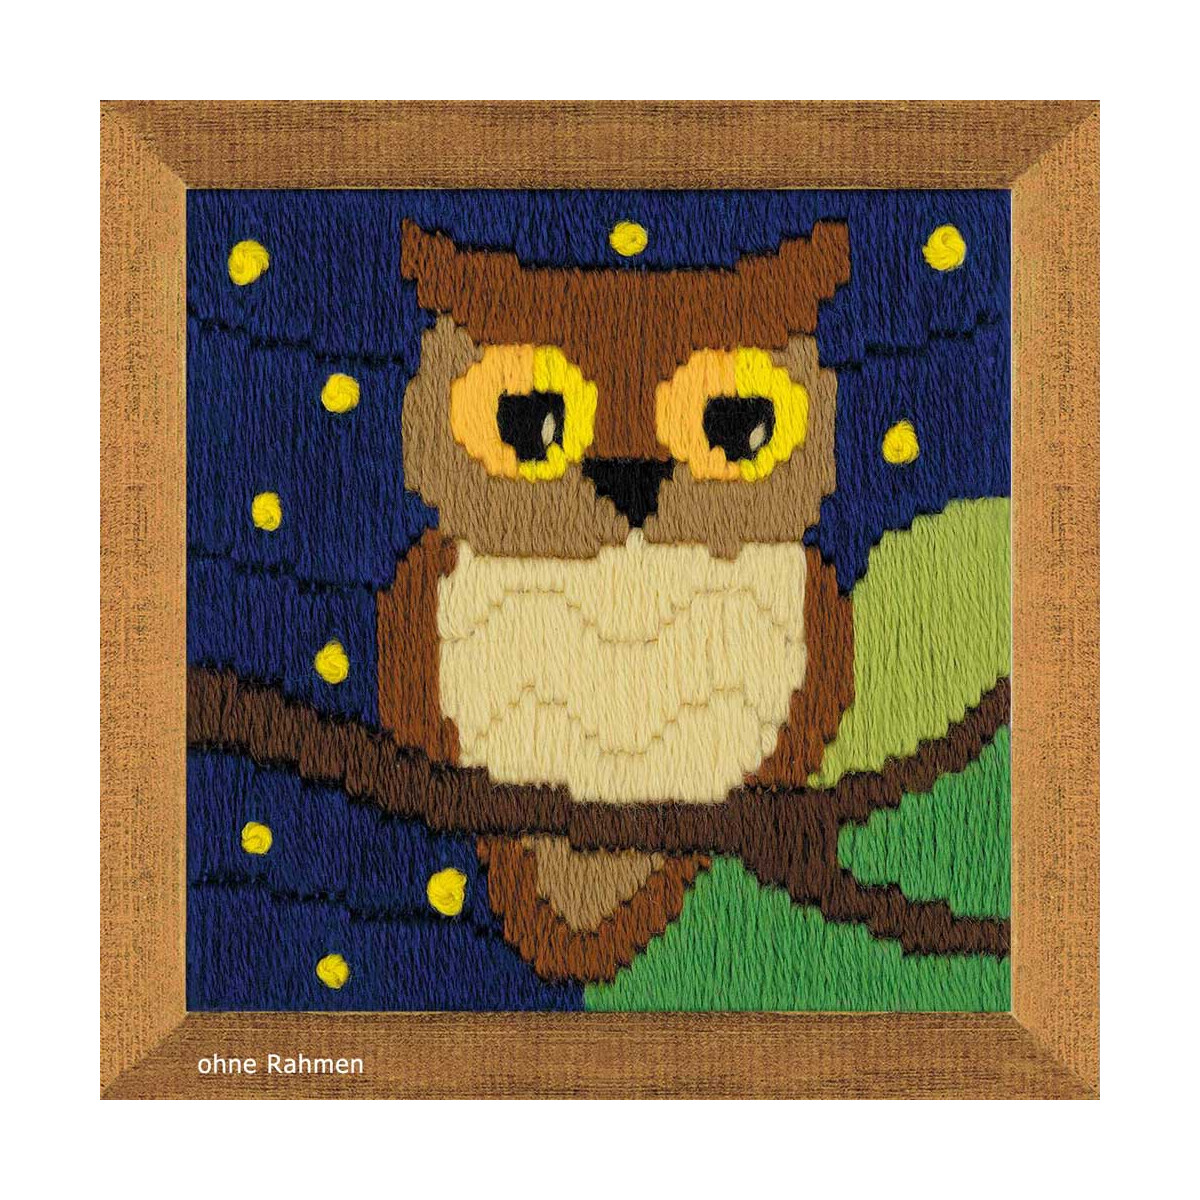 Riolis counted cross stitch Kit Owl Among The Stars, DIY